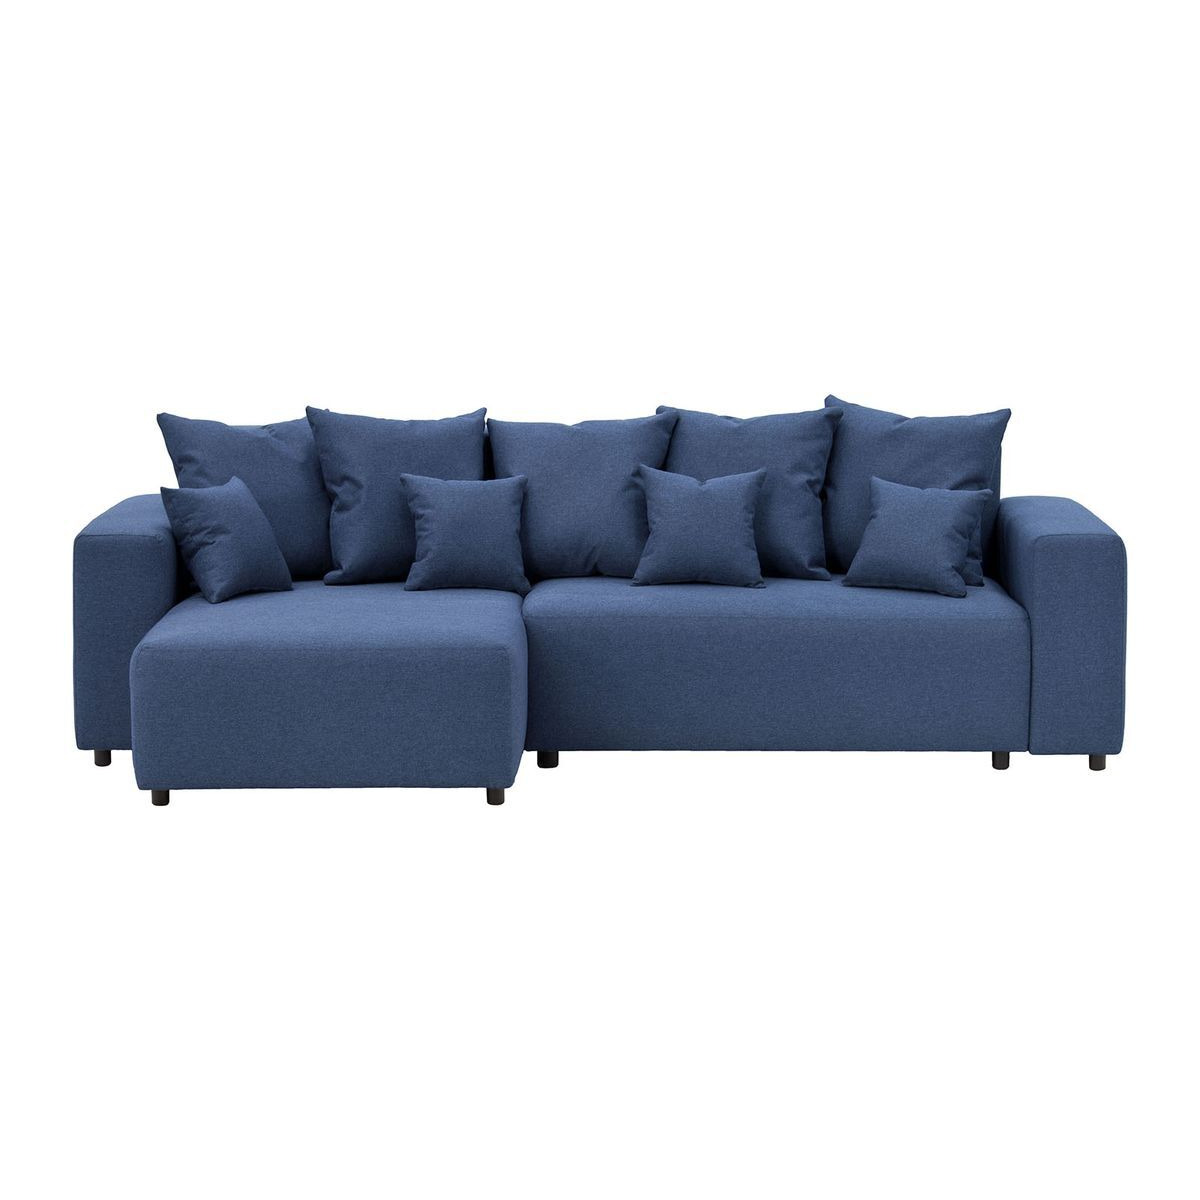 Homely Left Hand Corner Sofa Bed, navy blue - image 1